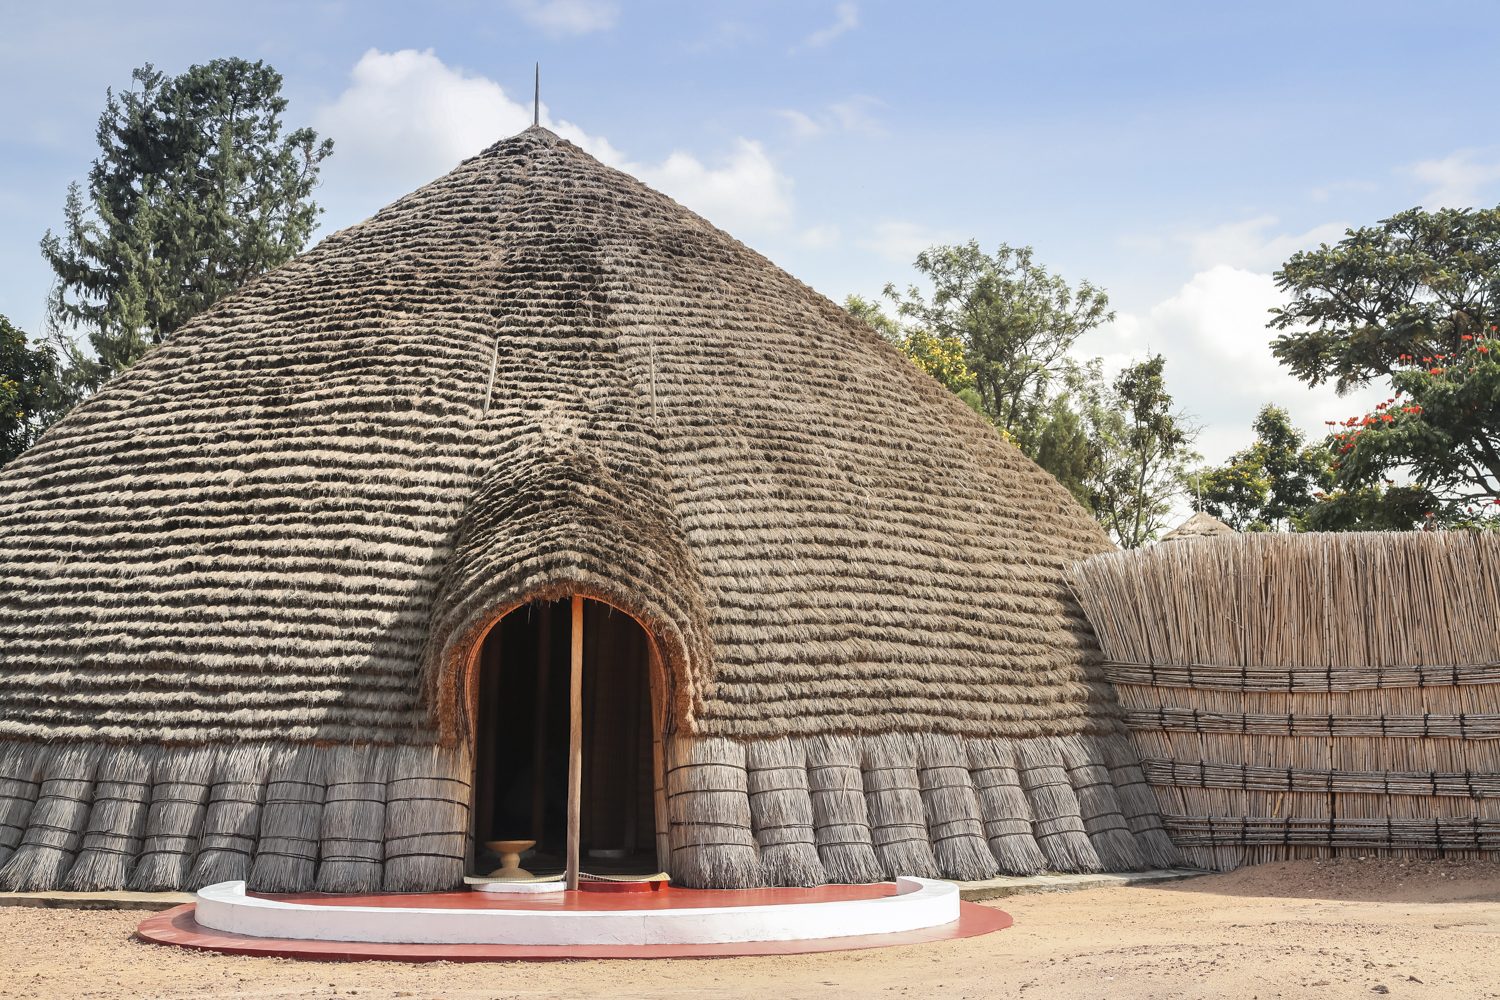 Nyanza King's Palace Museum